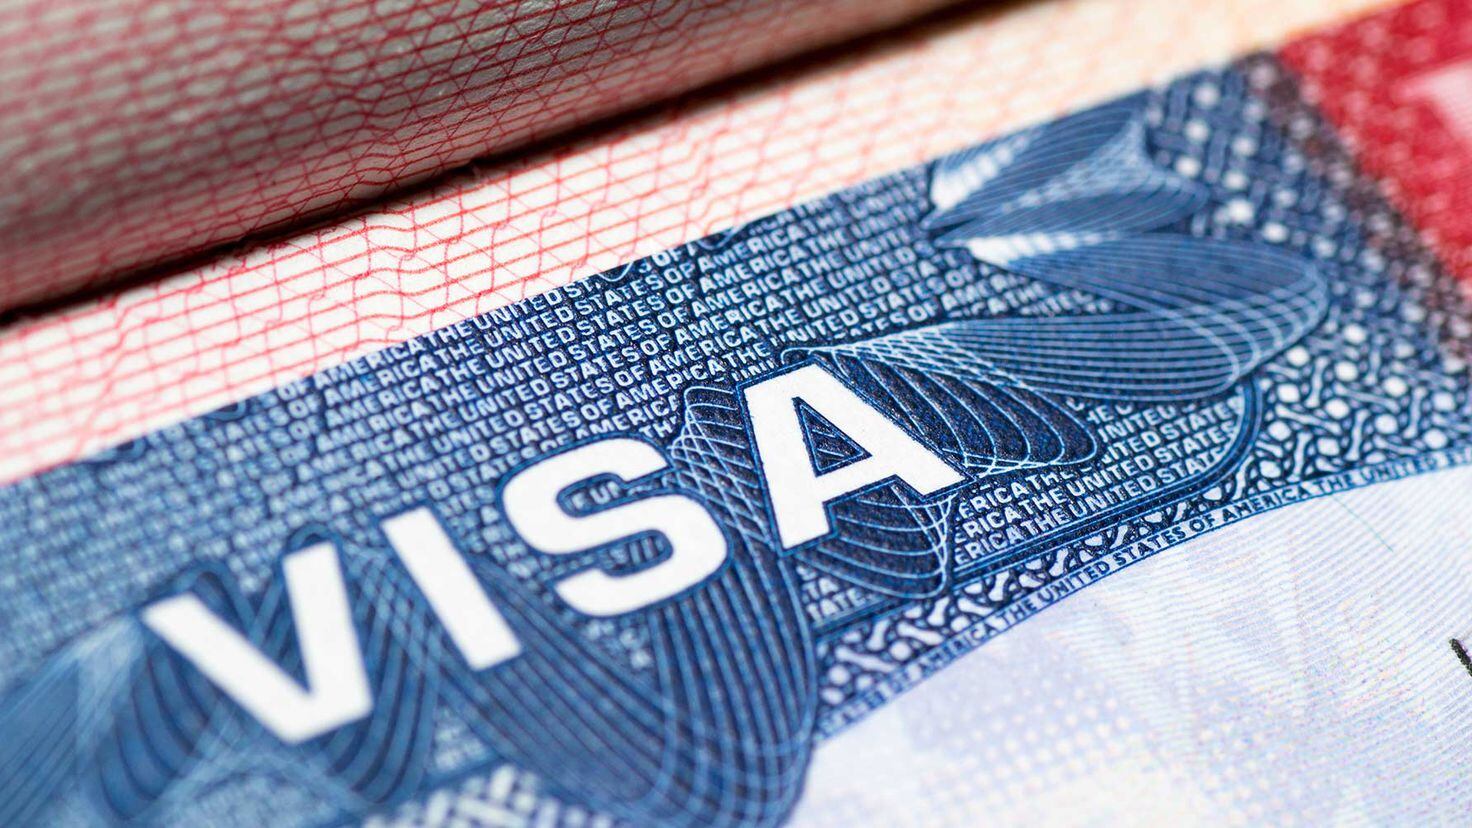 Visa those. Виза картинка. B1/b2 visa. Фото для сайта о визах.